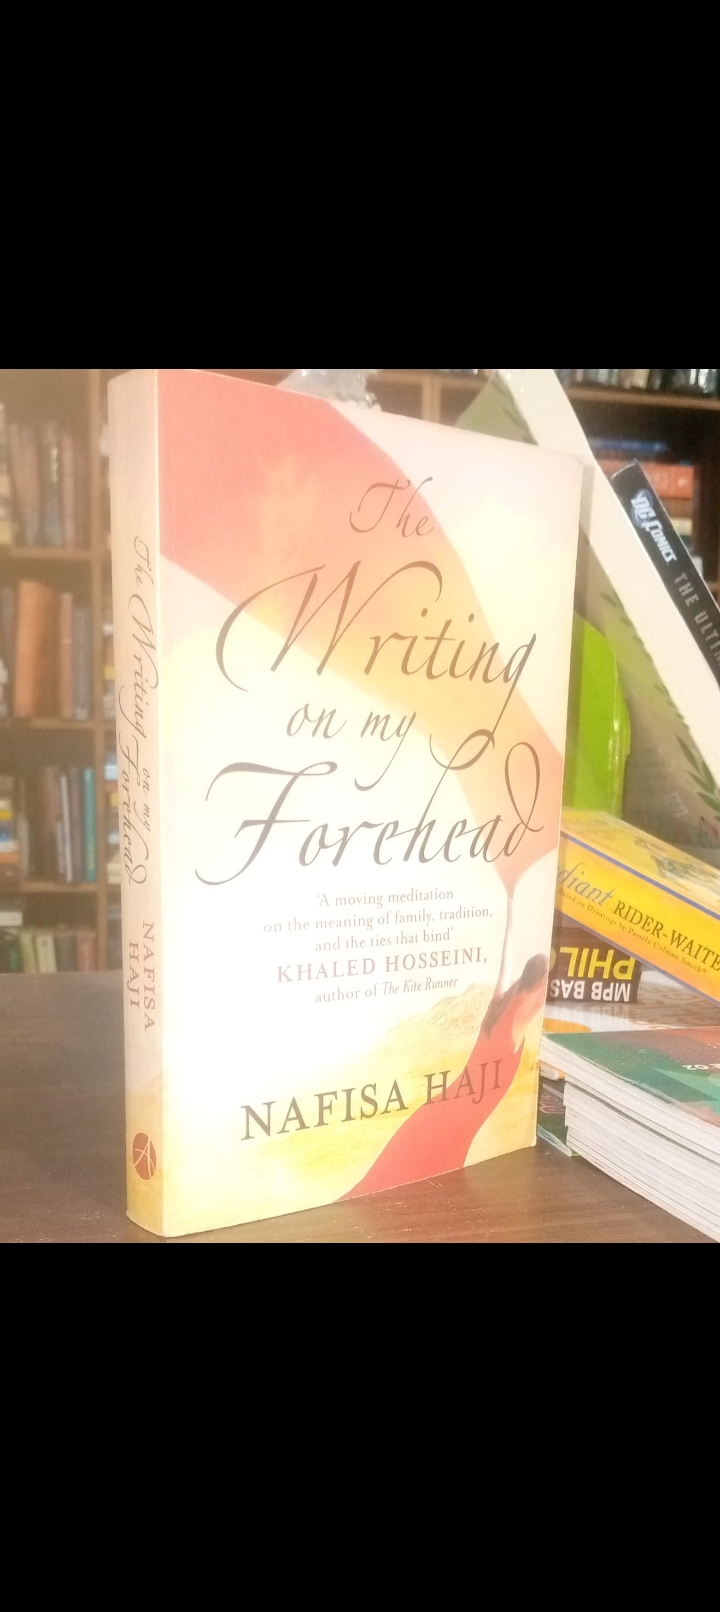 the writing on my forehead by nafisa haji. original paperback